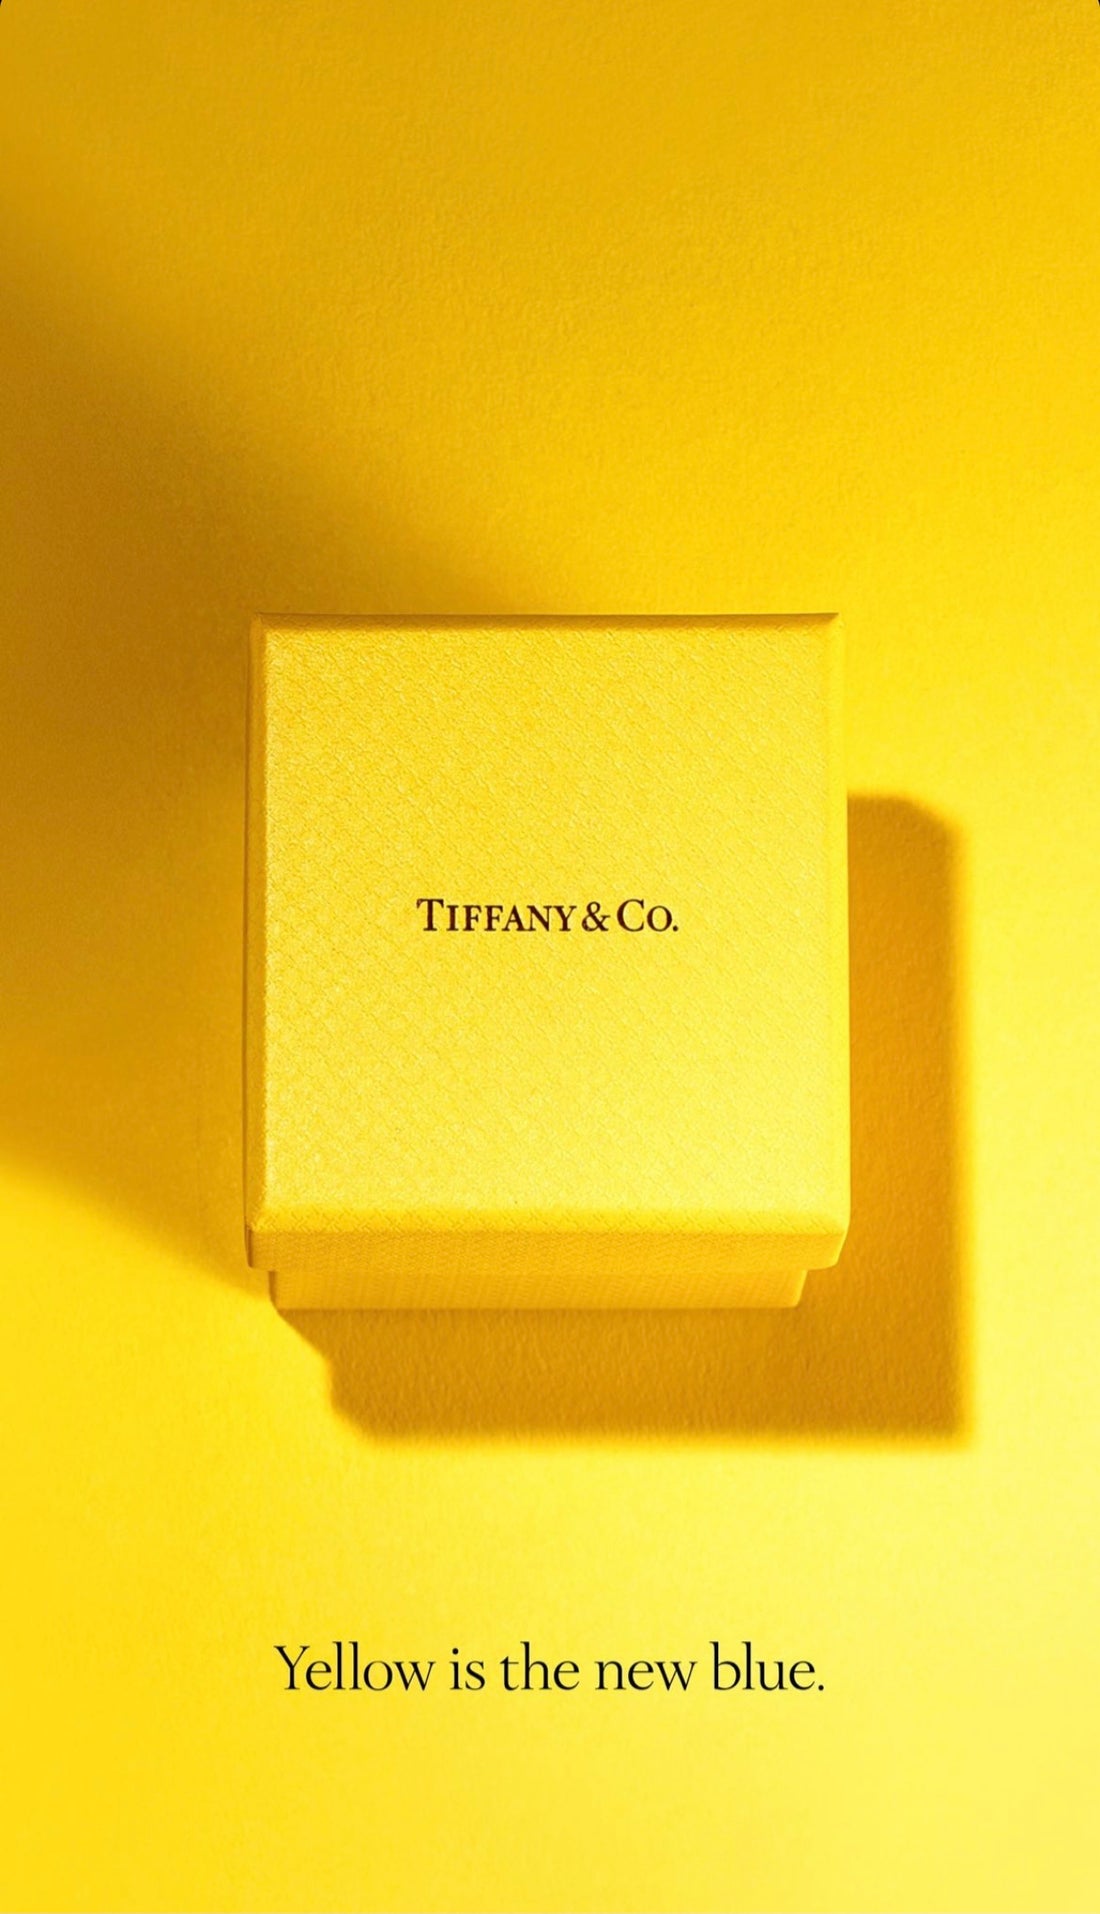 ¿La broma de Tiffany & Co?